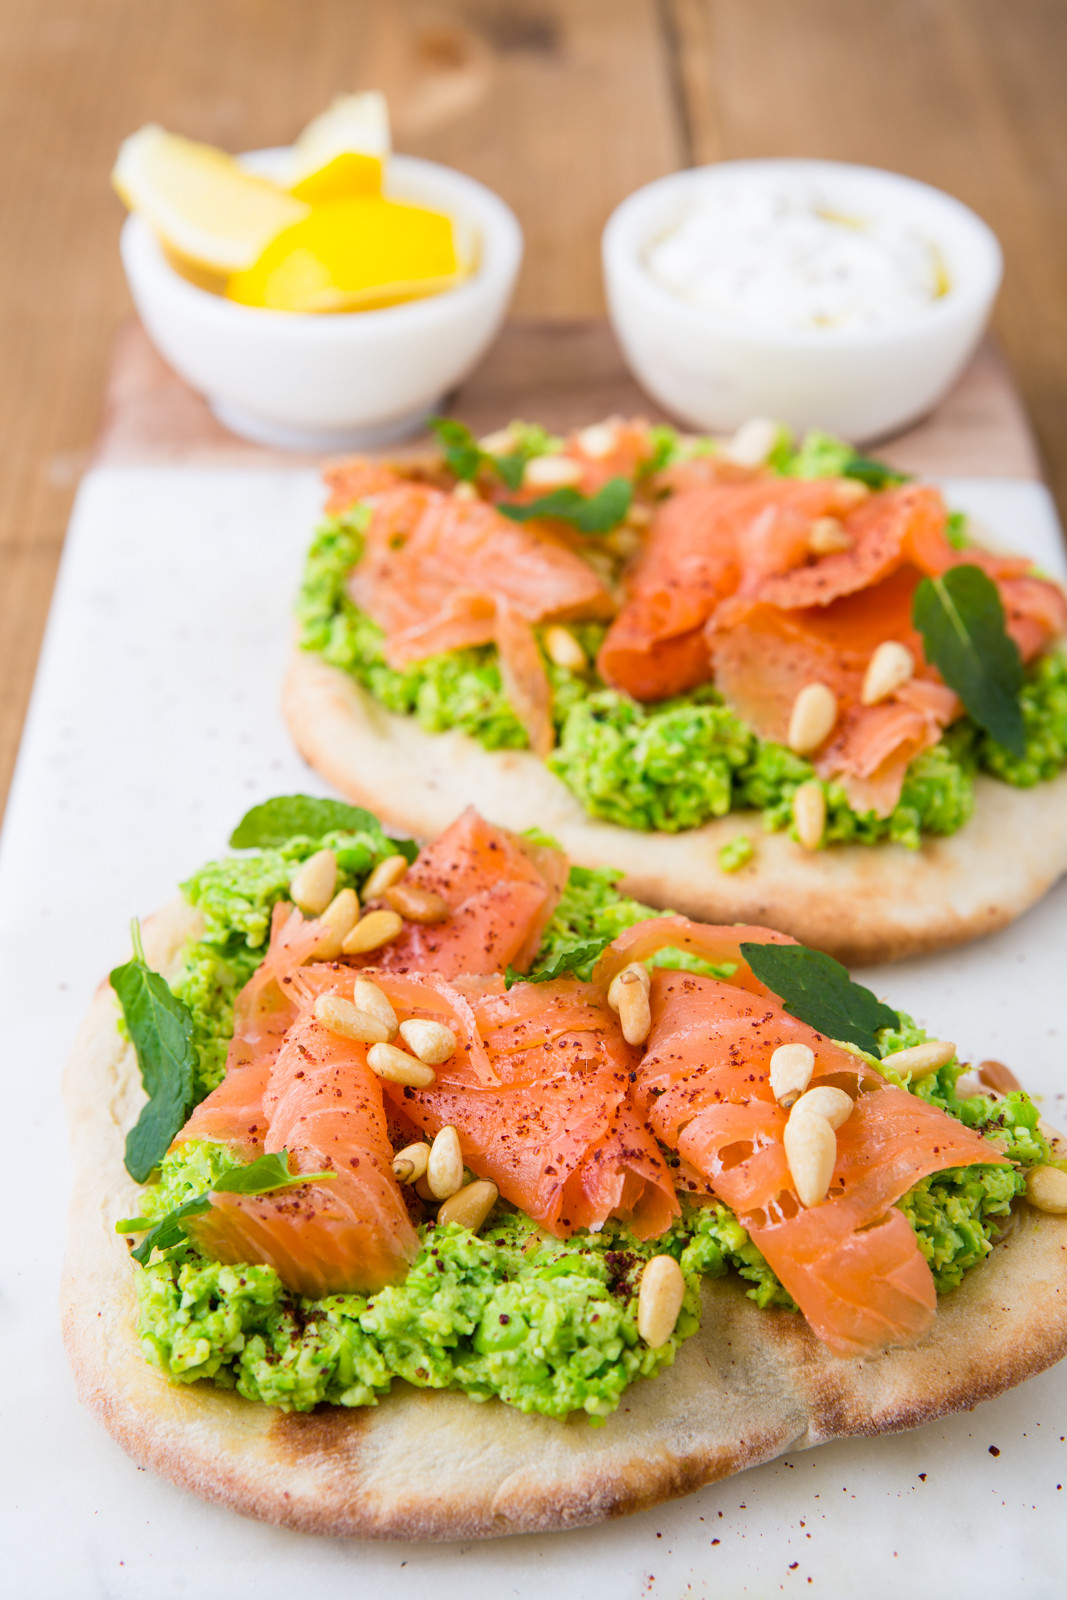 Smoked Salmon Healthy
 Smoked Salmon & Hummus Lunch Recipes